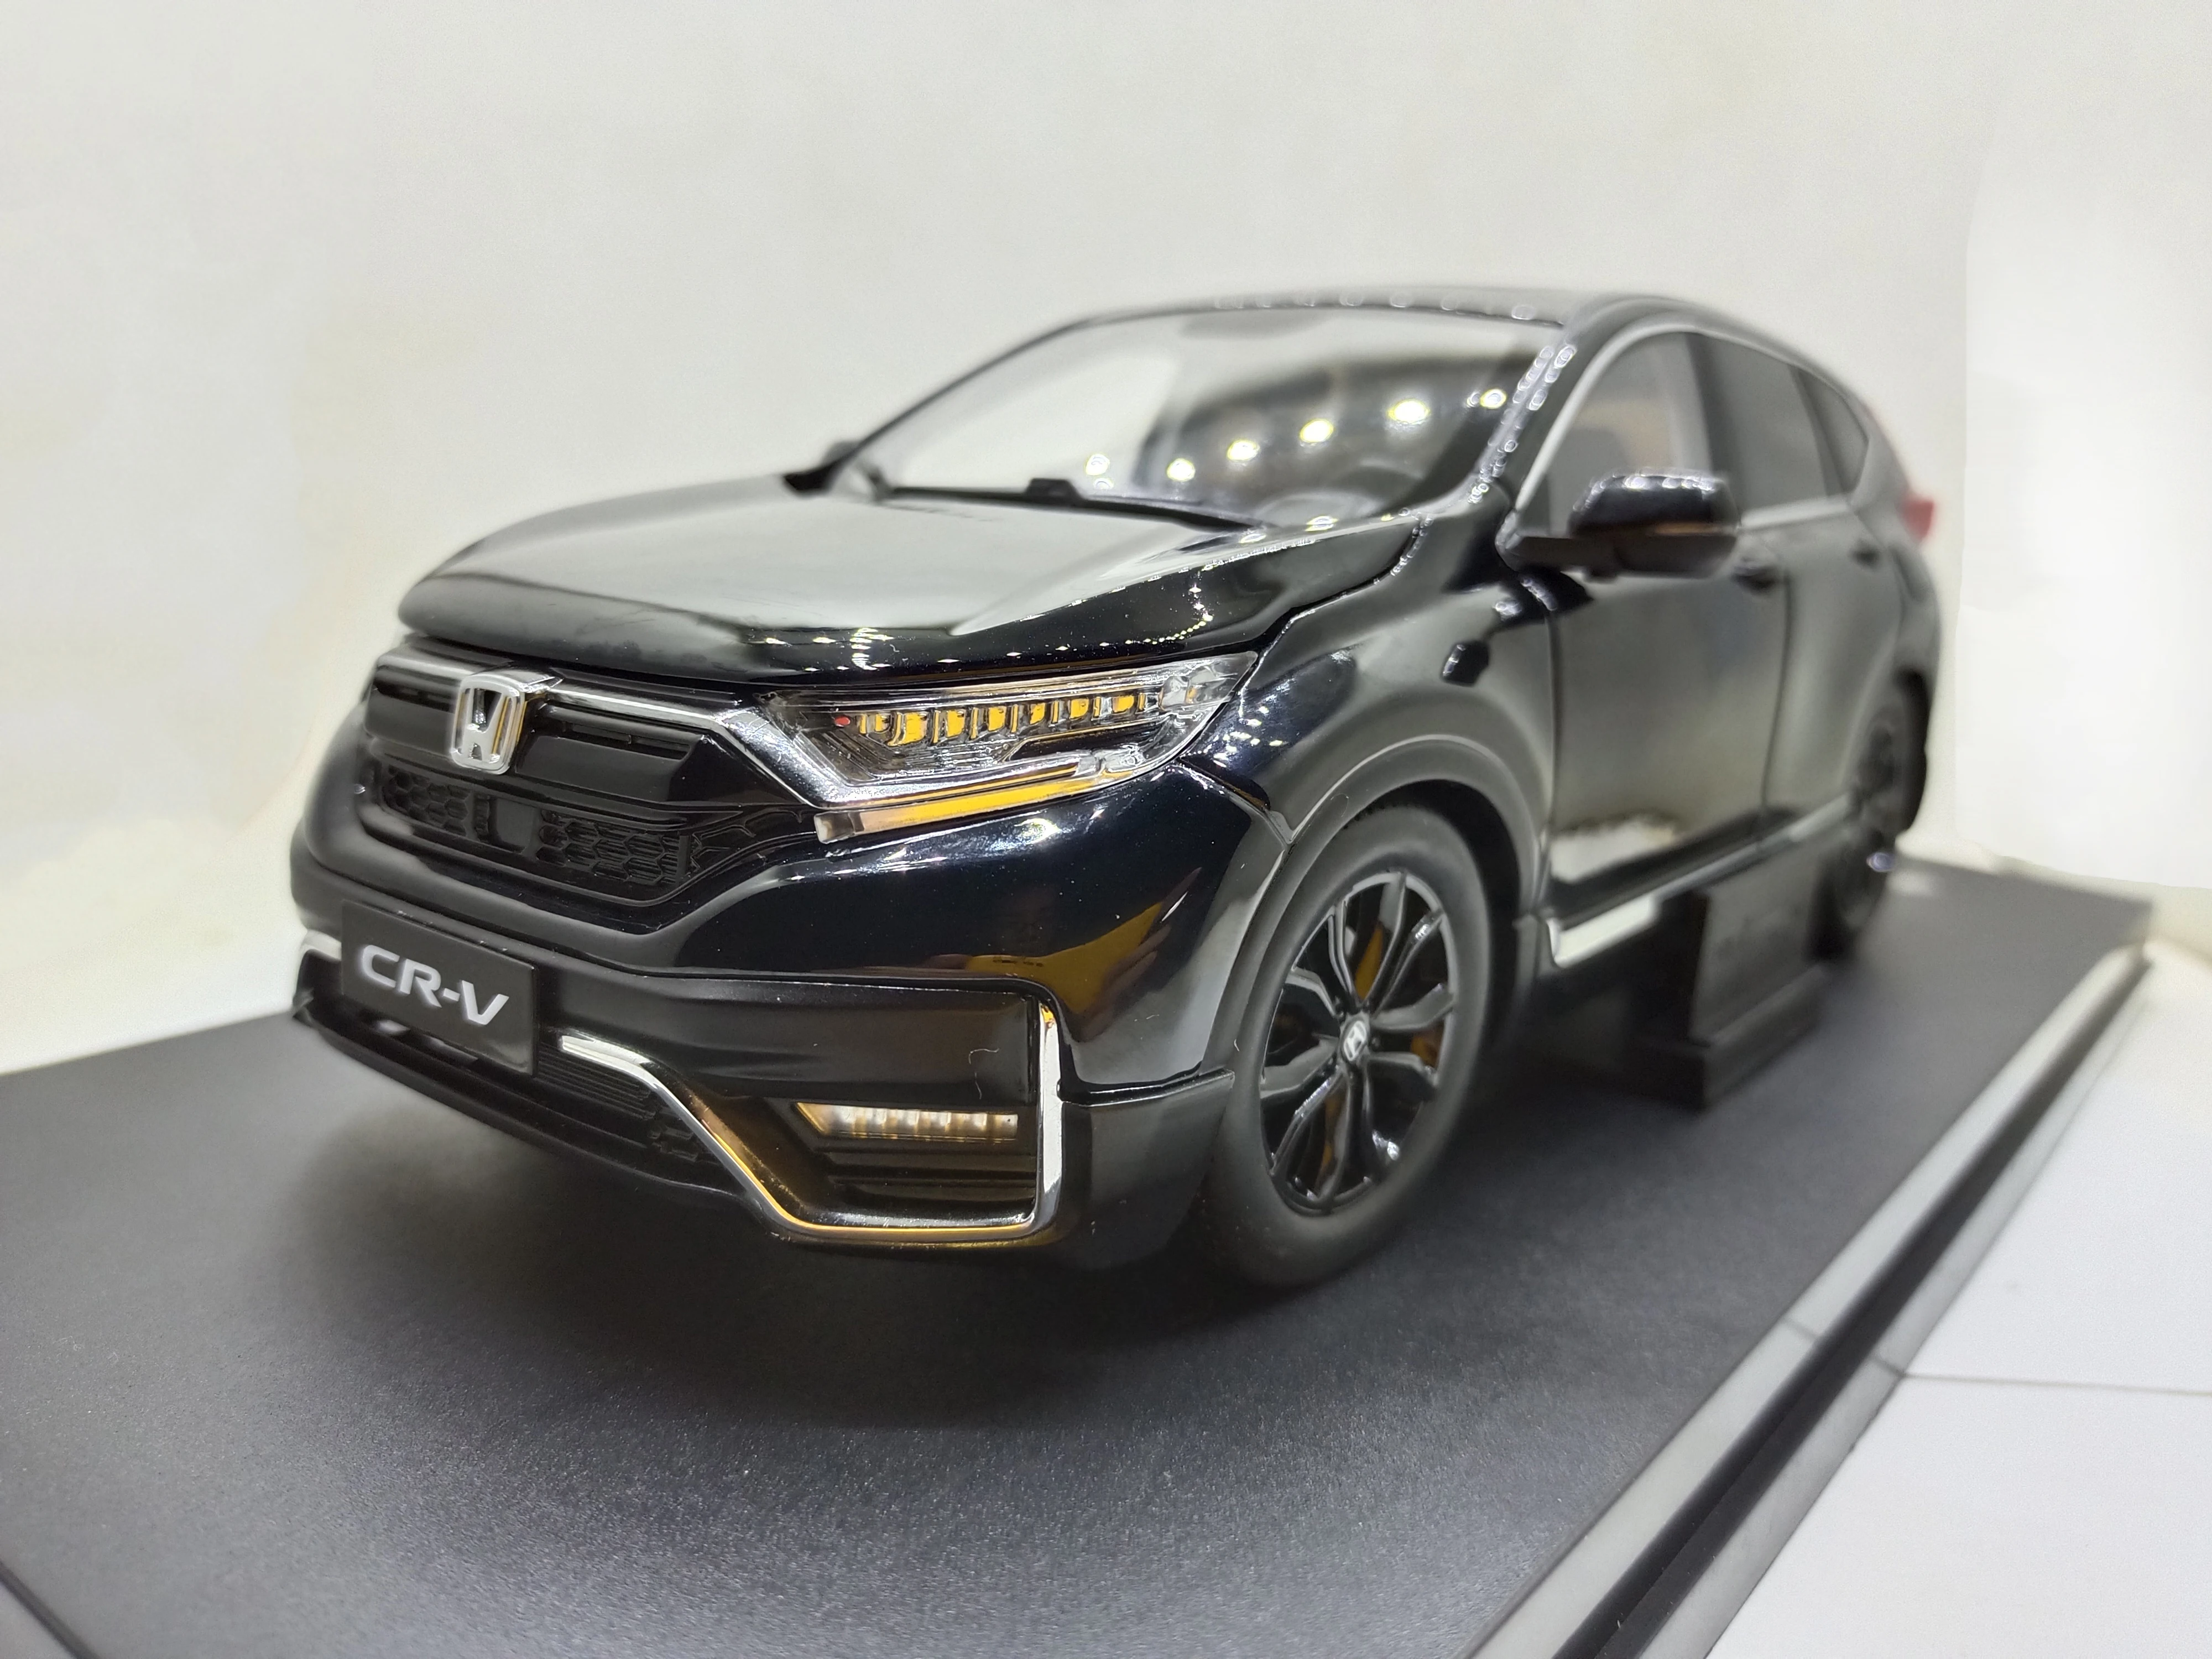 1:18 Diecast Model for Honda CR-V 2020 SUV Black Rare Alloy Toy Car Miniature Collection Gifts CRV CR V